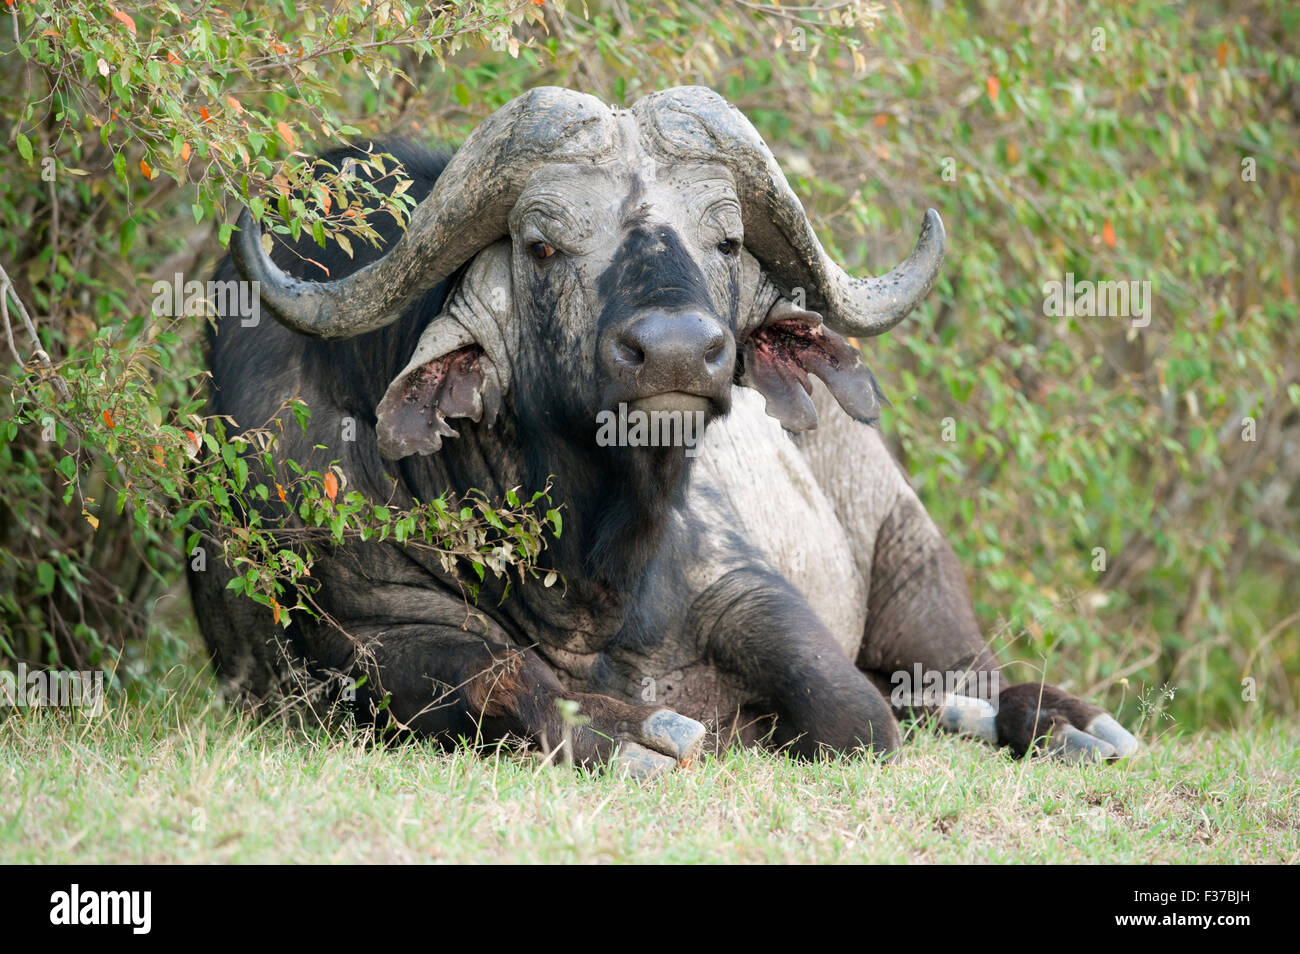 Old african buffalo, buffle (Syncerus caffer), allongé dans l'herbe, Maasai Mara National Reserve, Kenya, comté de Narok Banque D'Images